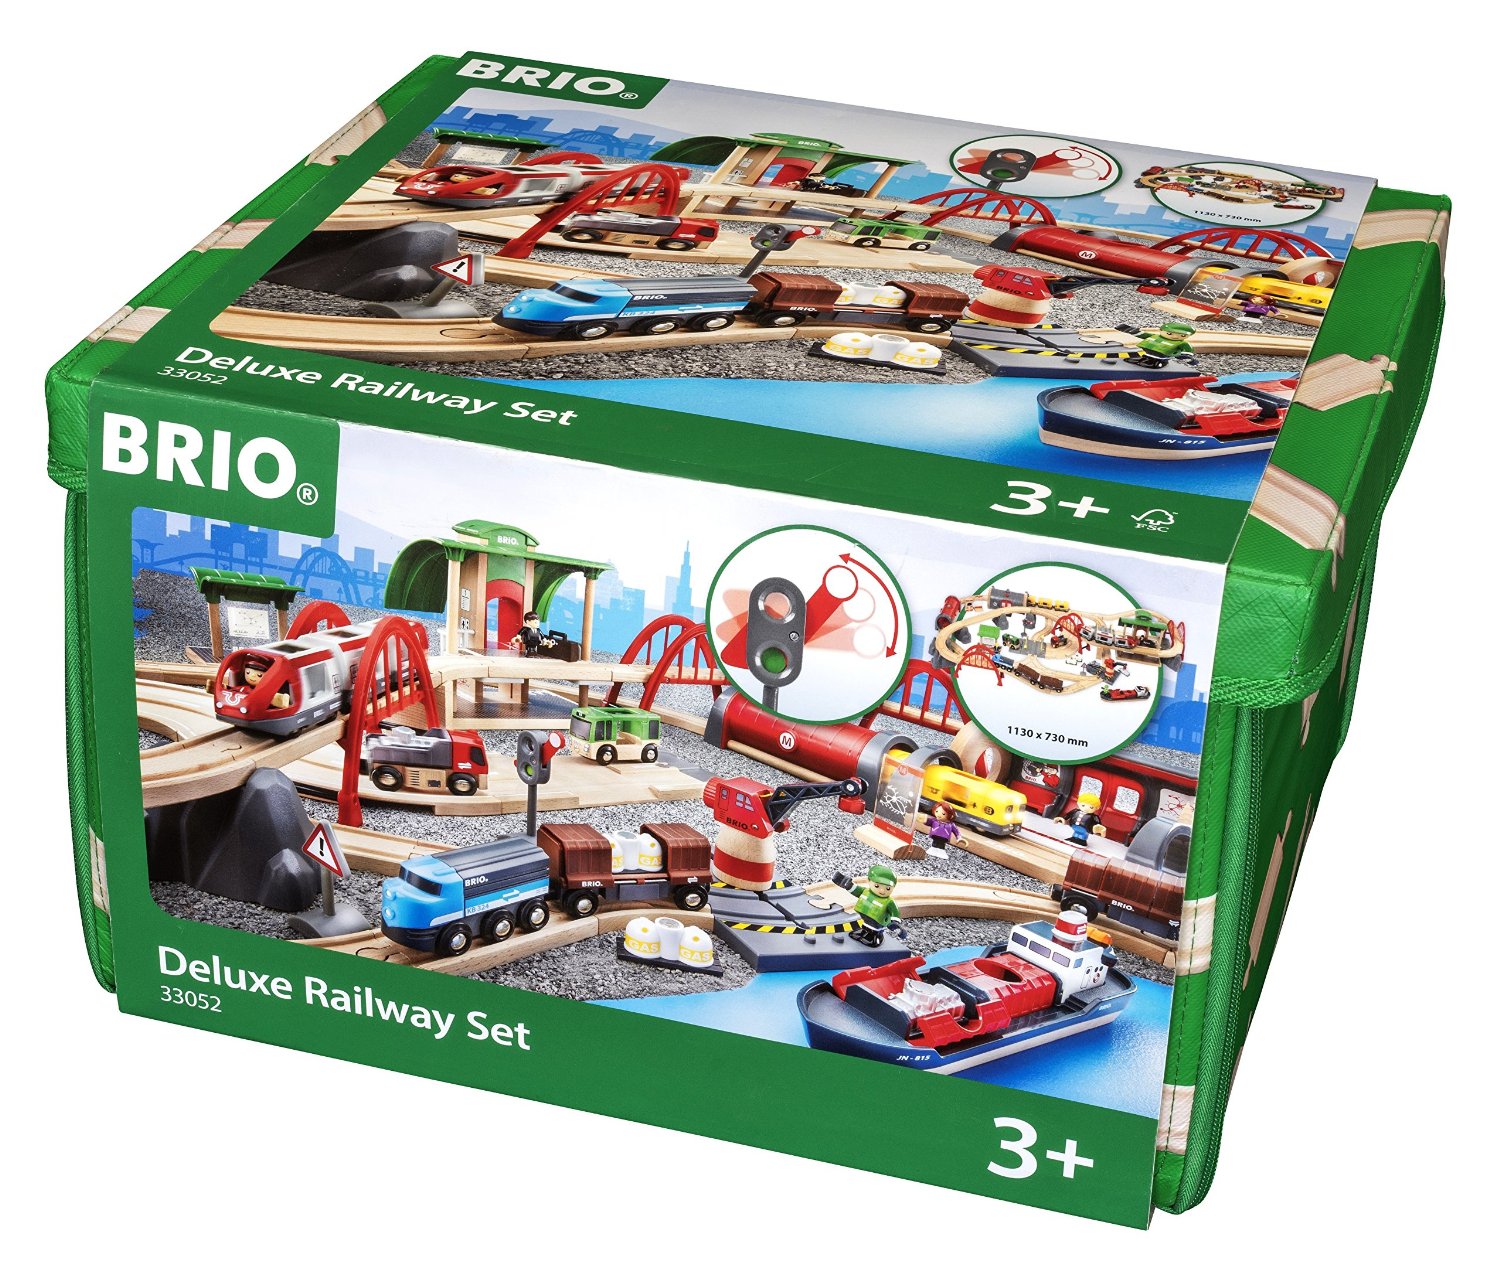 Brio Deluxe Railway Set (33052)